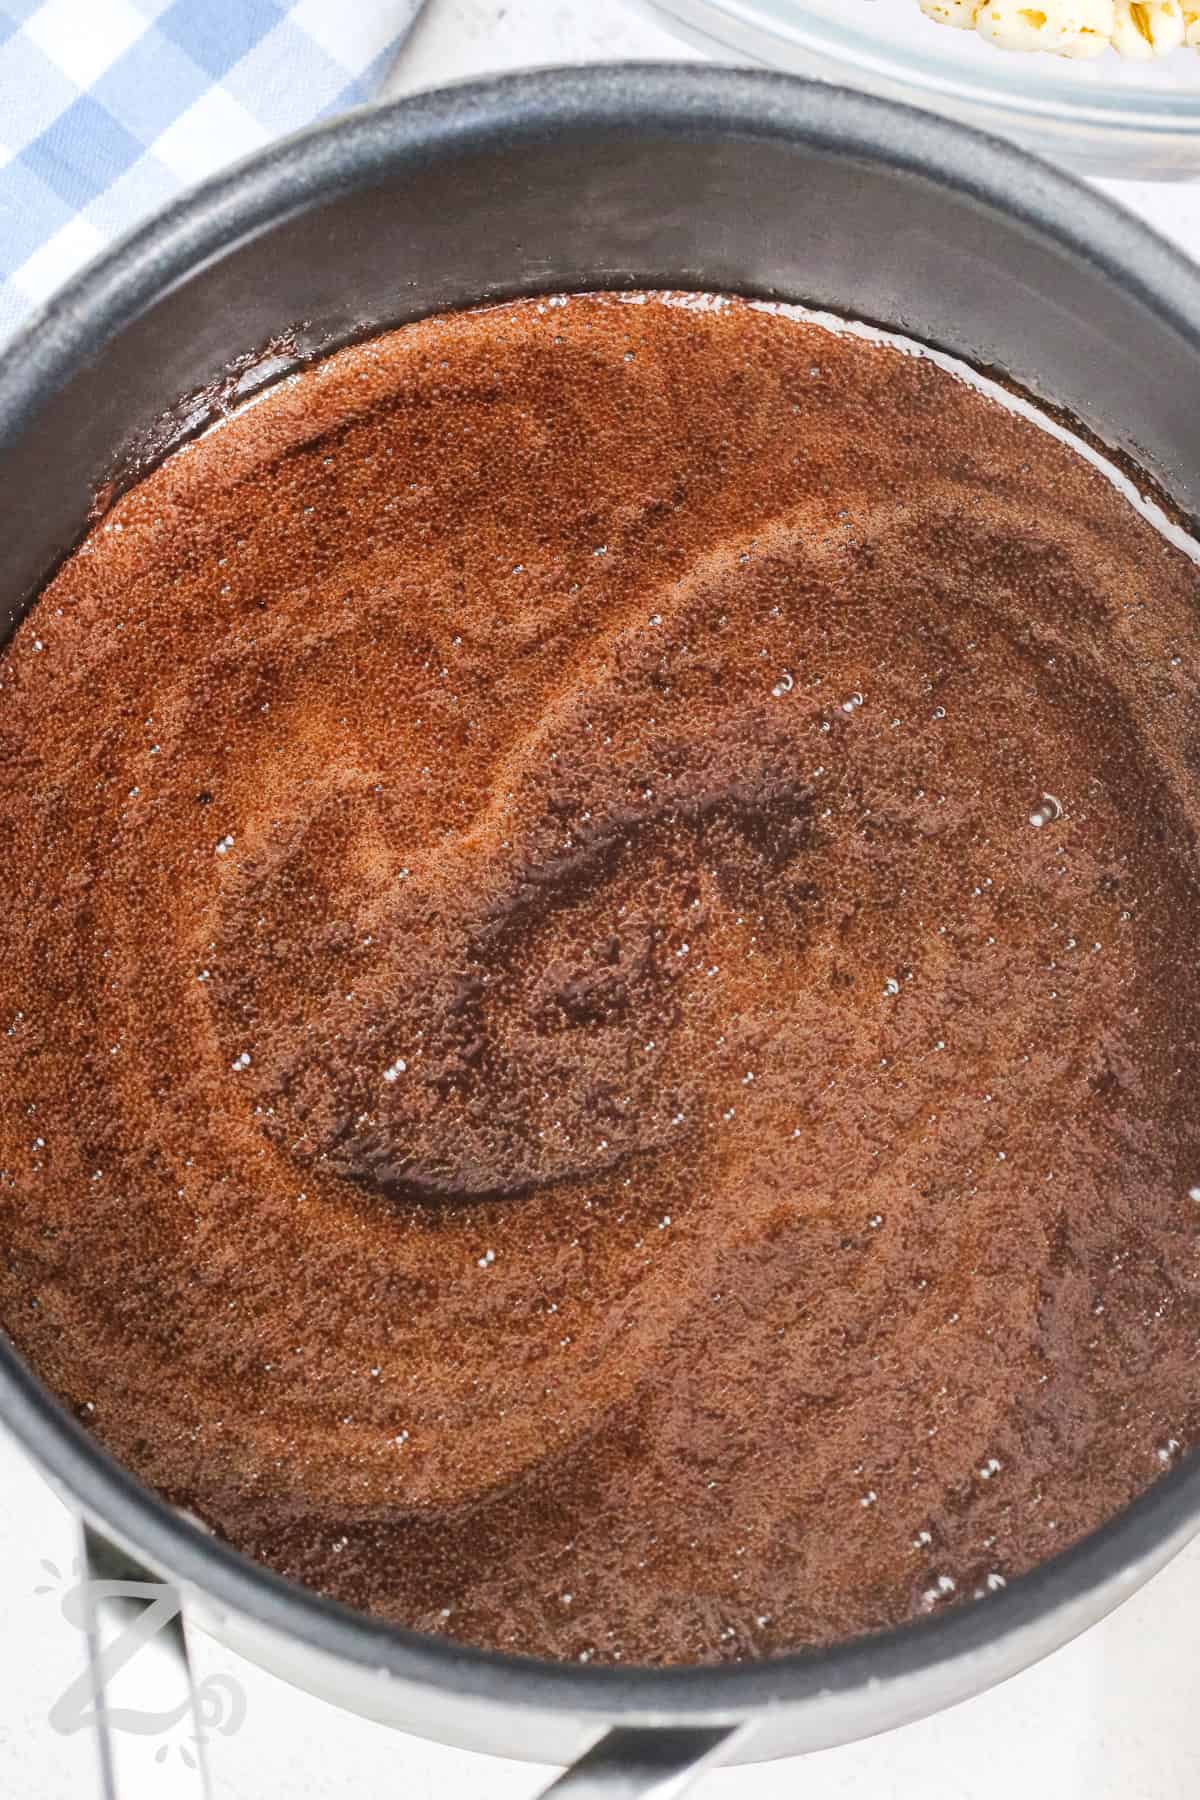 Puffed wheat sauce mixture prepared in a sauce pan